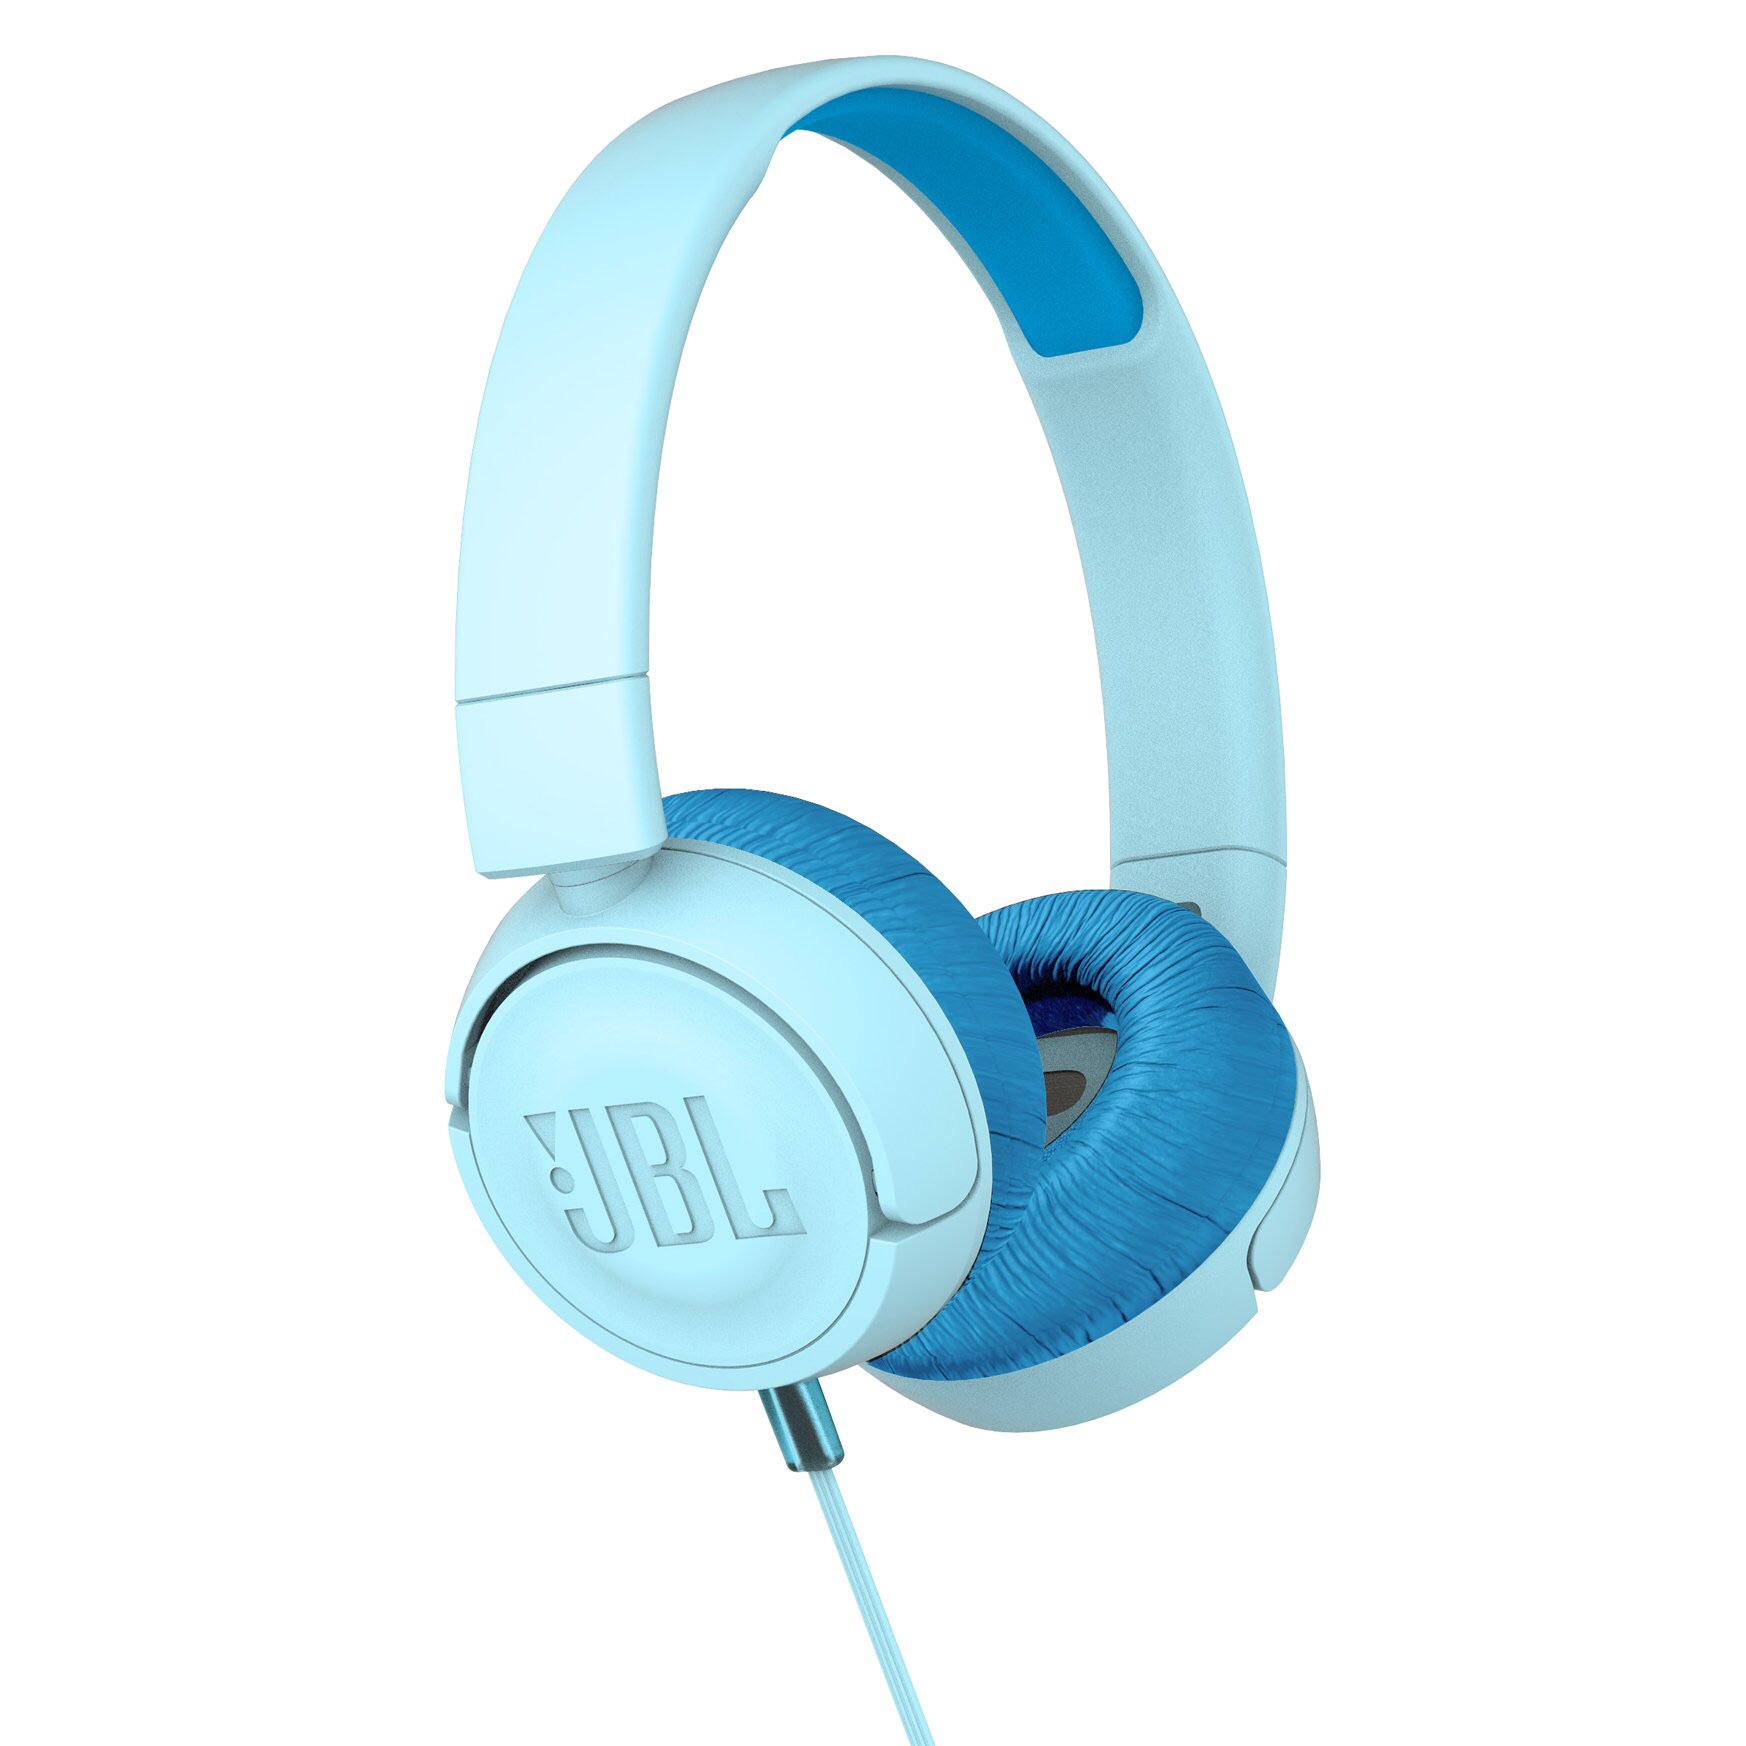 Amazon.com: JBL JR 300 - On-Ear Headphones for Kids - Blue: Electronics儿童专用有线耳机